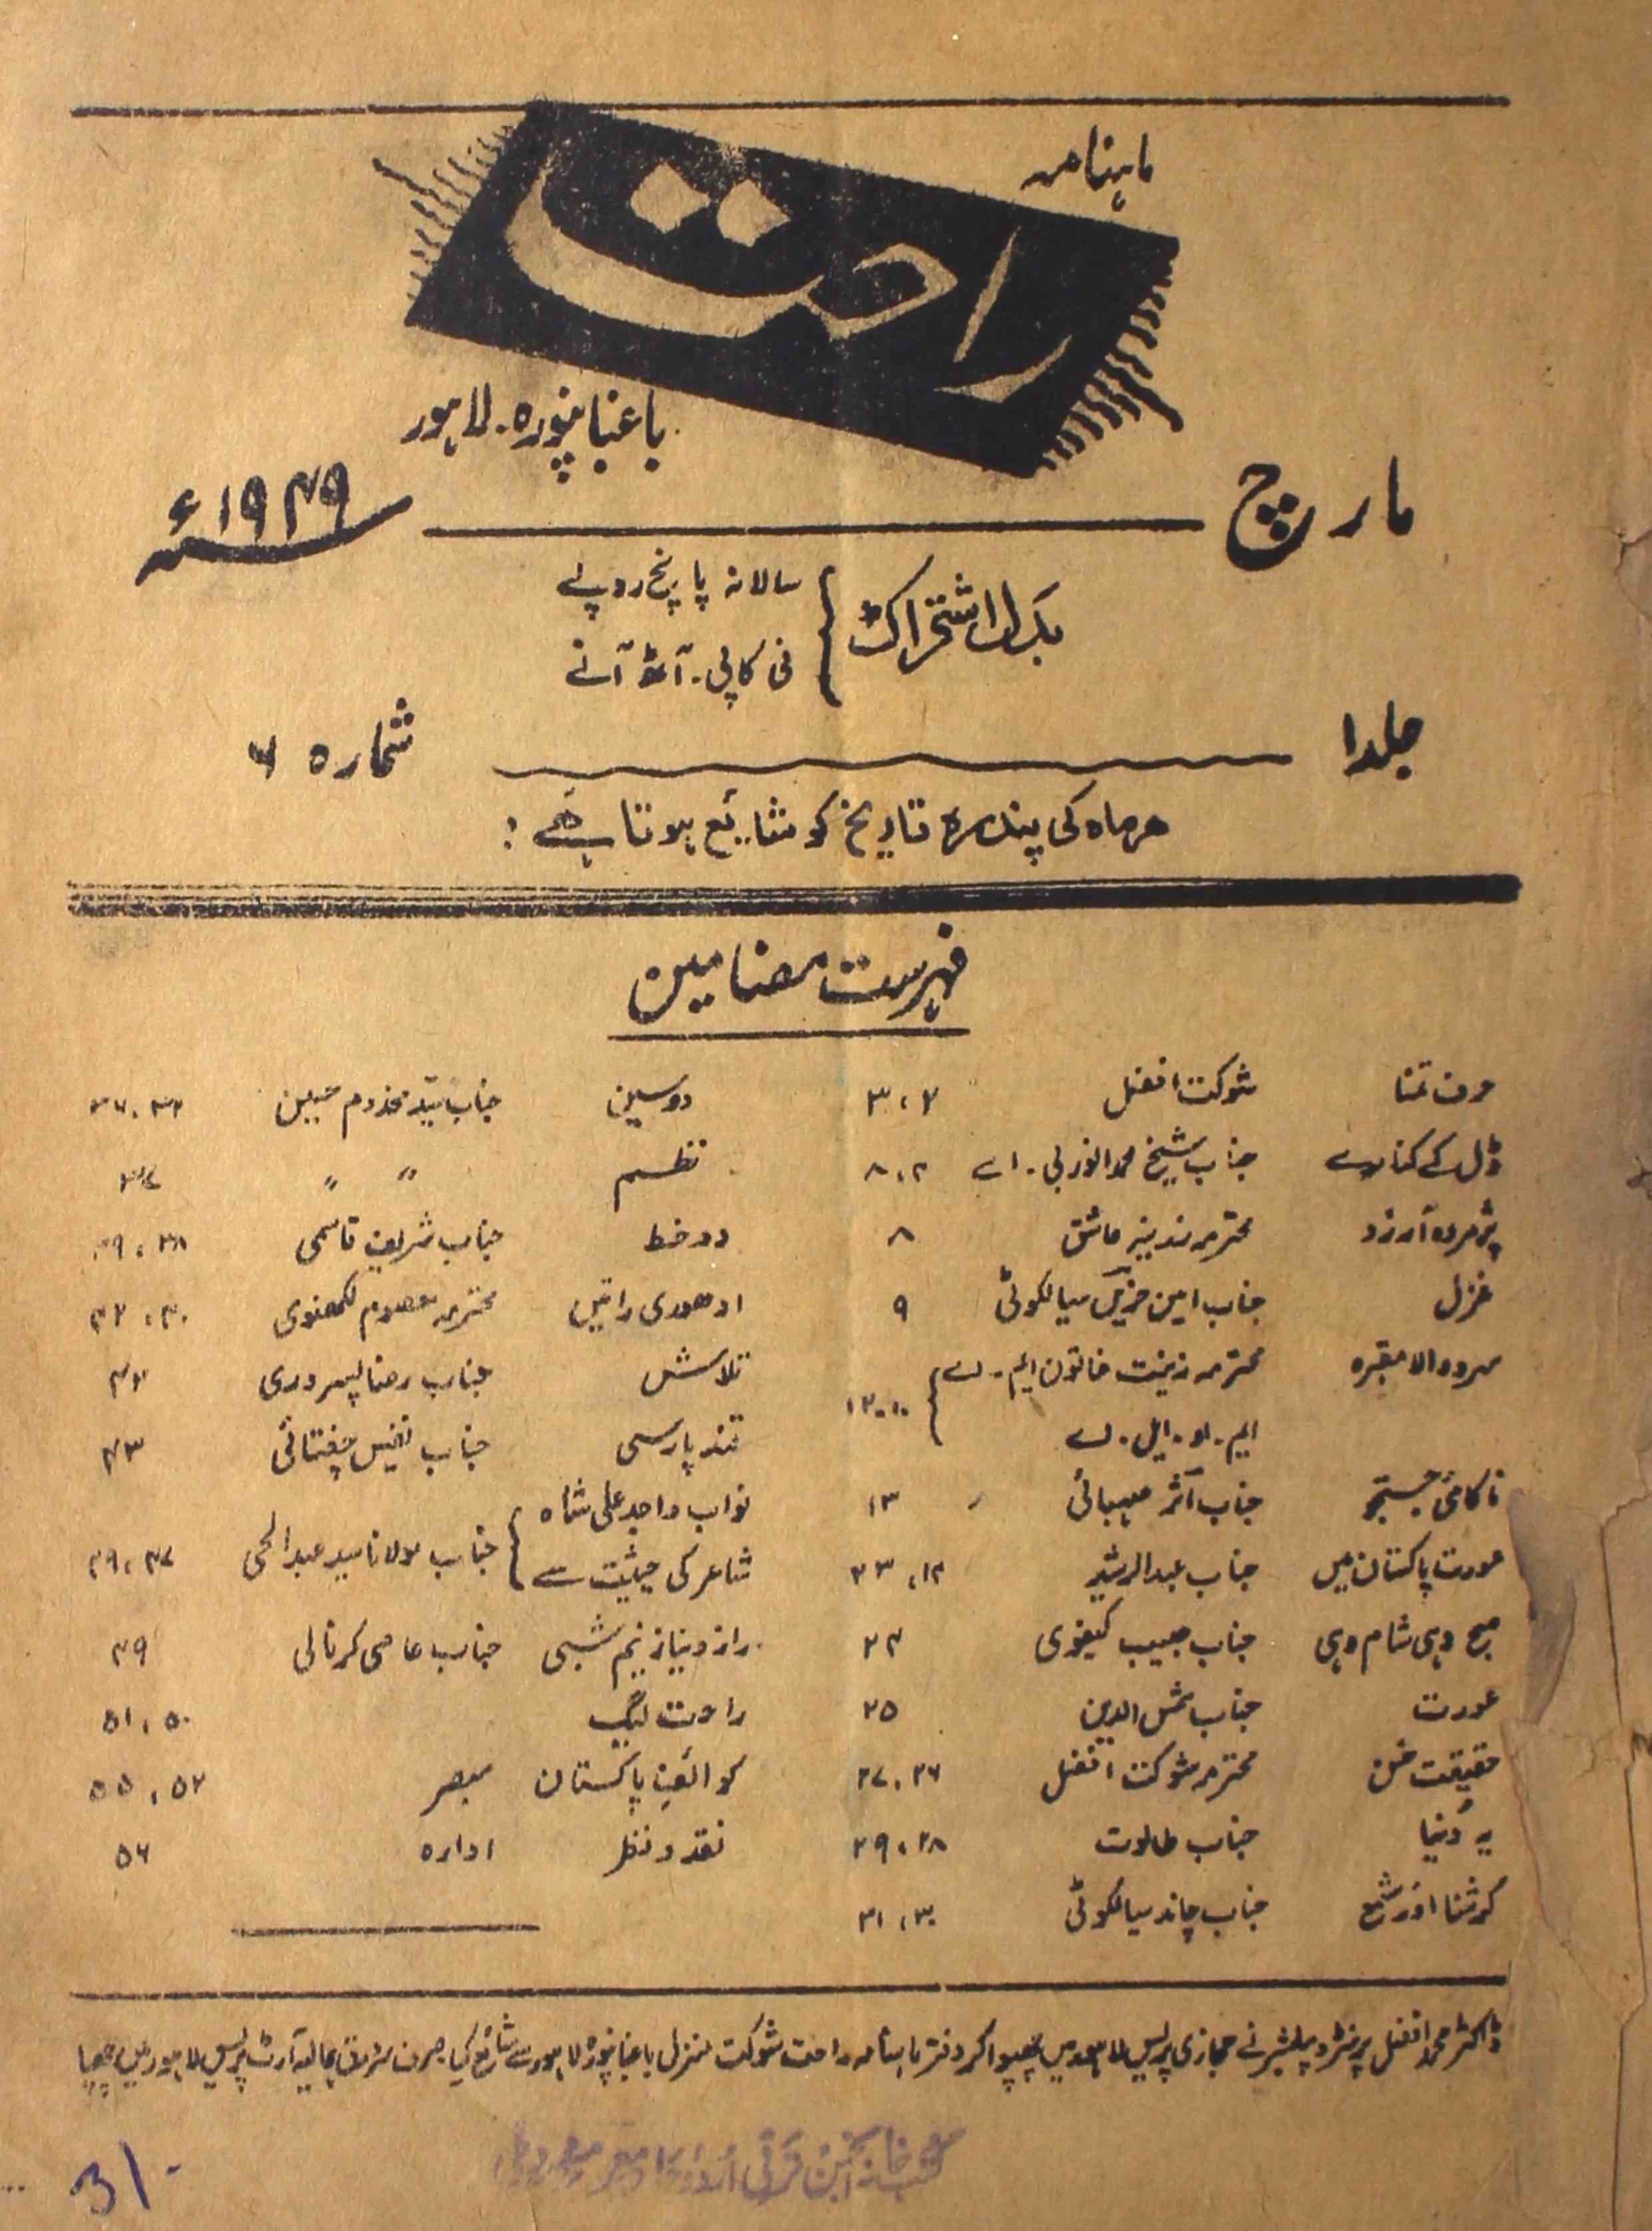 Raahat Jild 1 Shumara 6 March 1949-Svk-Shumara Number-006